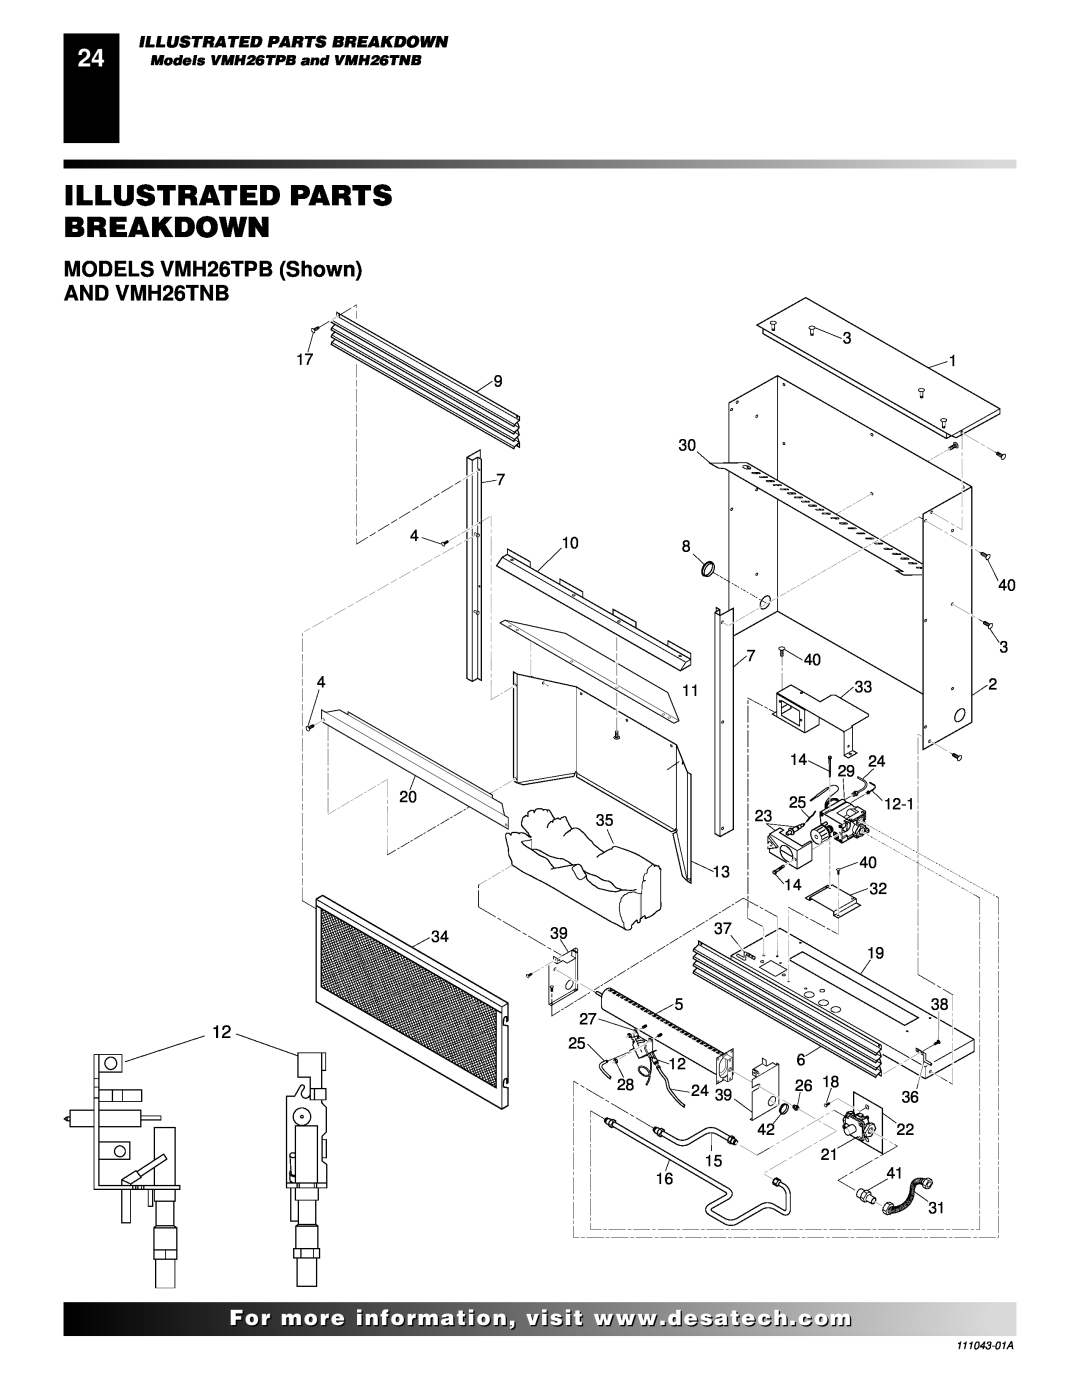 Vanguard Heating WMH26TNB installation manual Illustrated Parts Breakdown, MODELS VMH26TPB Shown AND VMH26TNB 